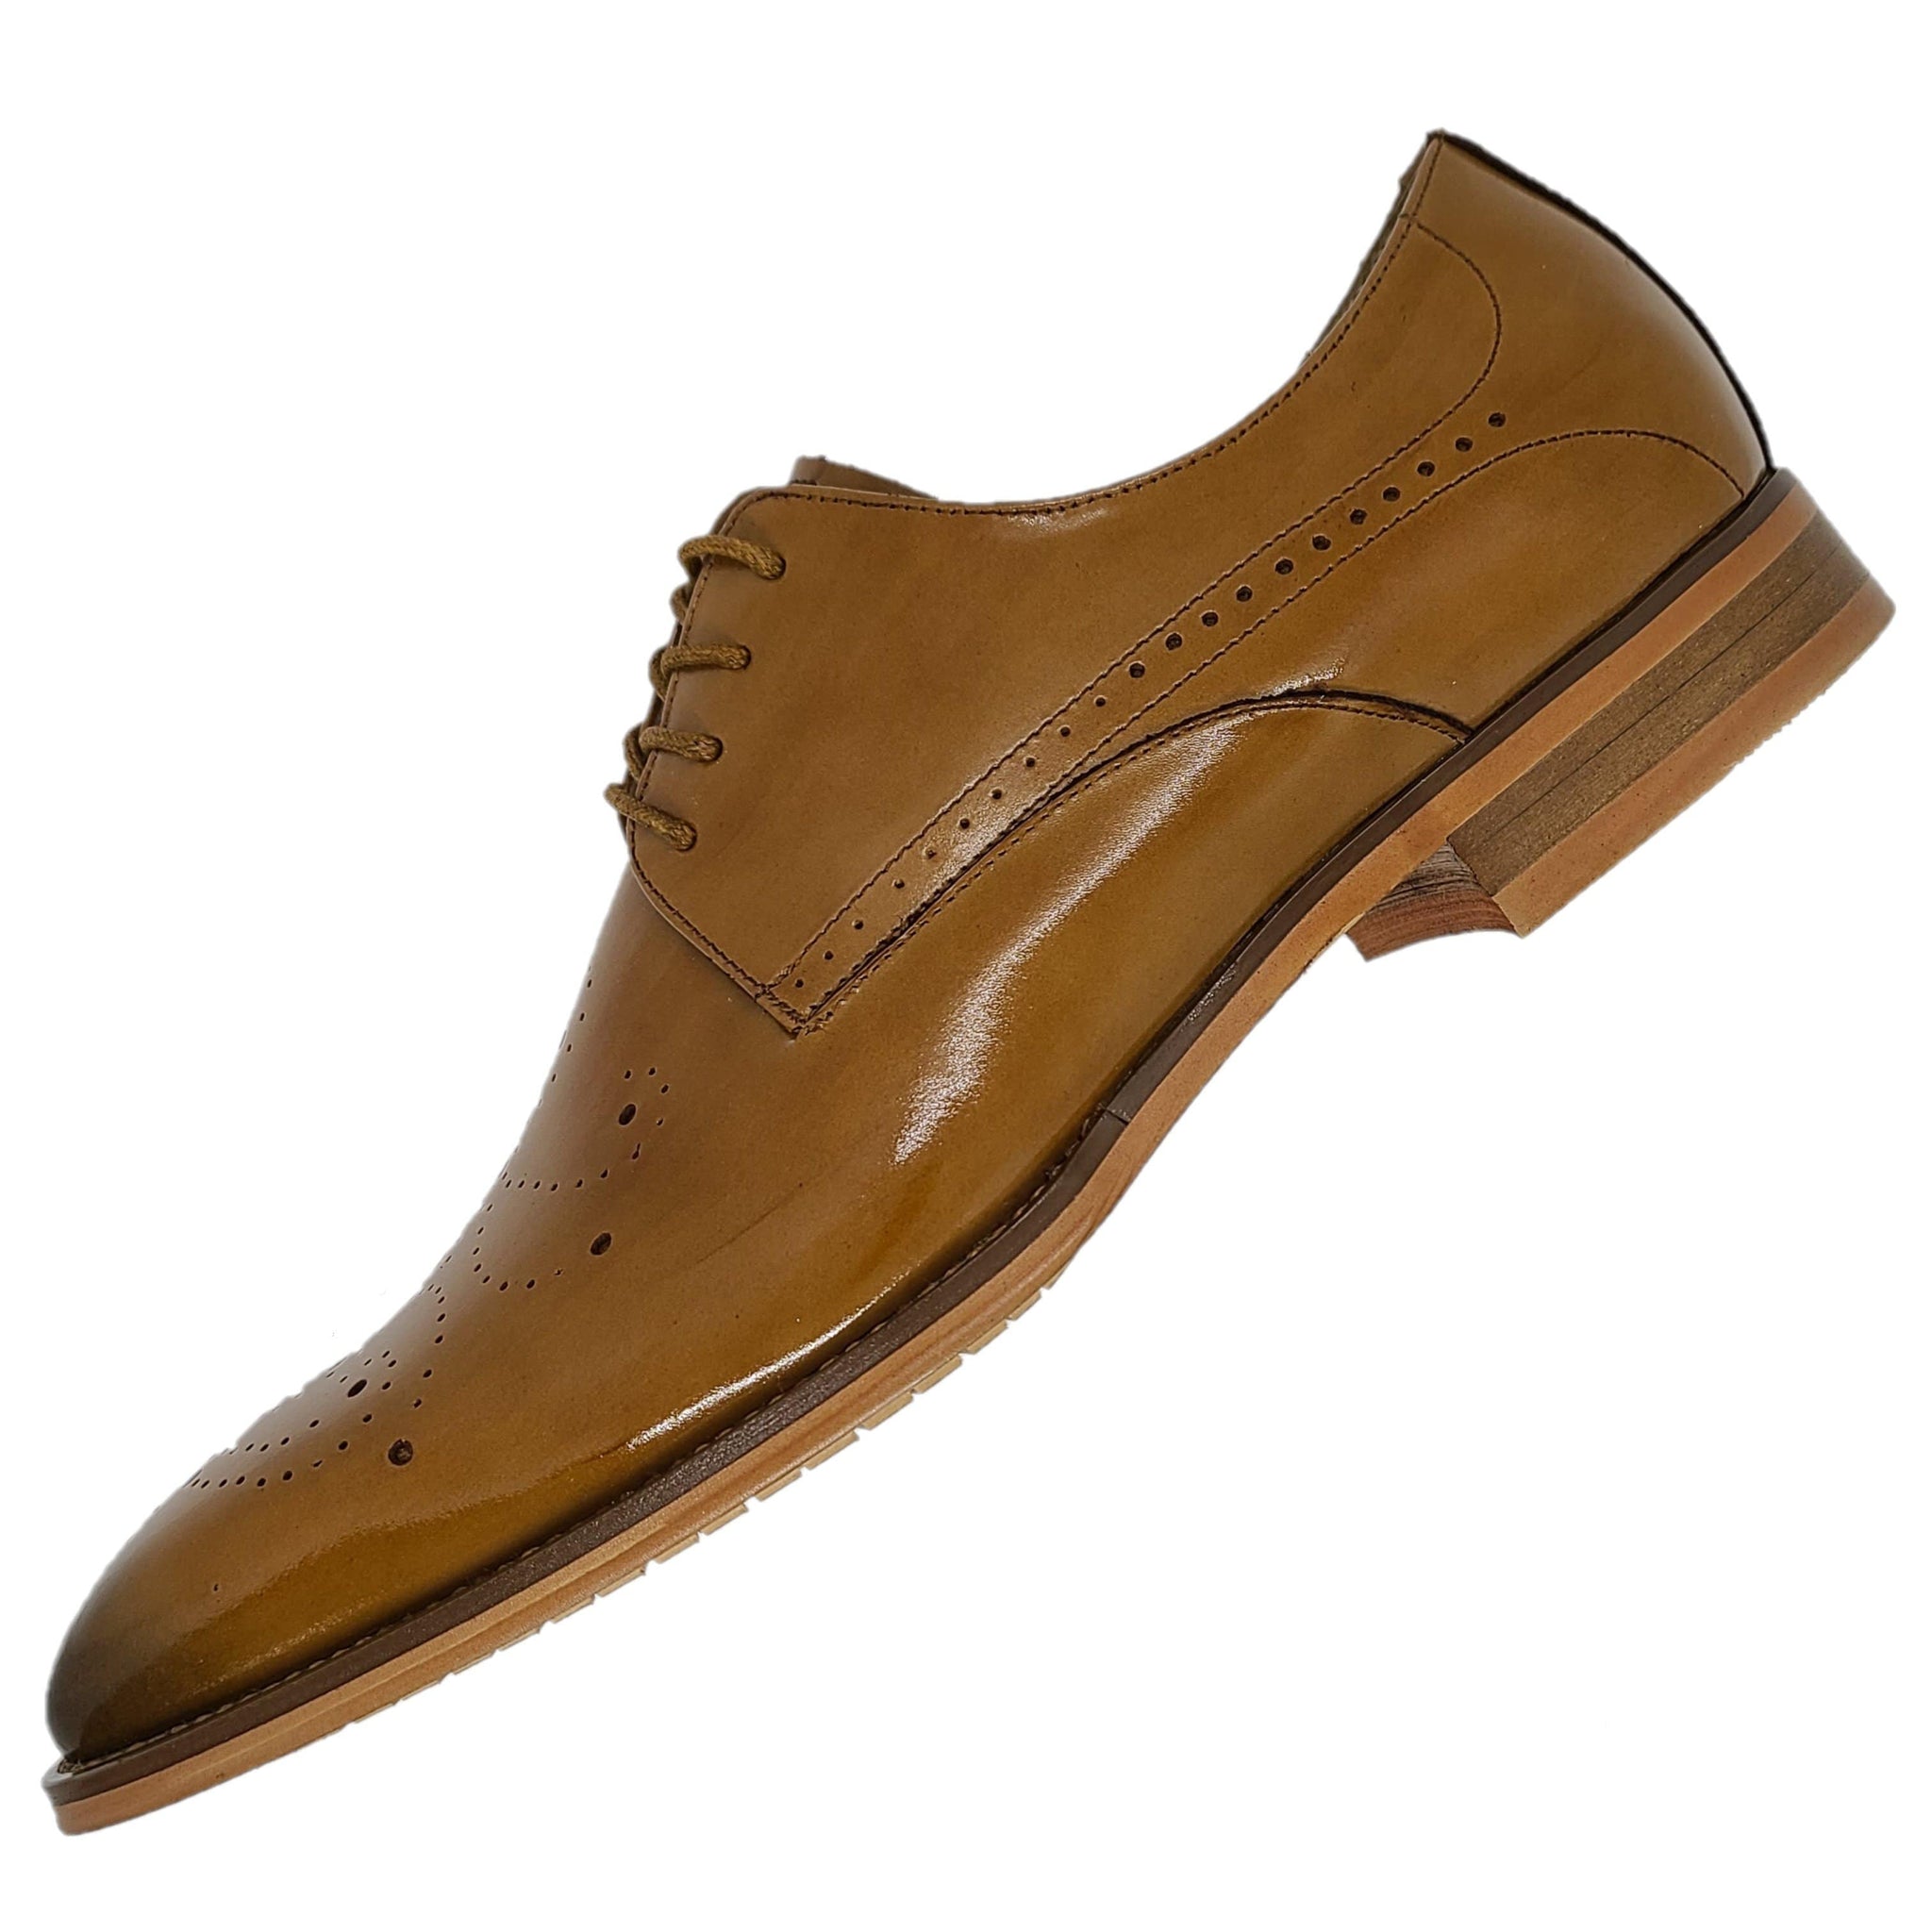 Giovanni Tan Leather Oxford Shoe